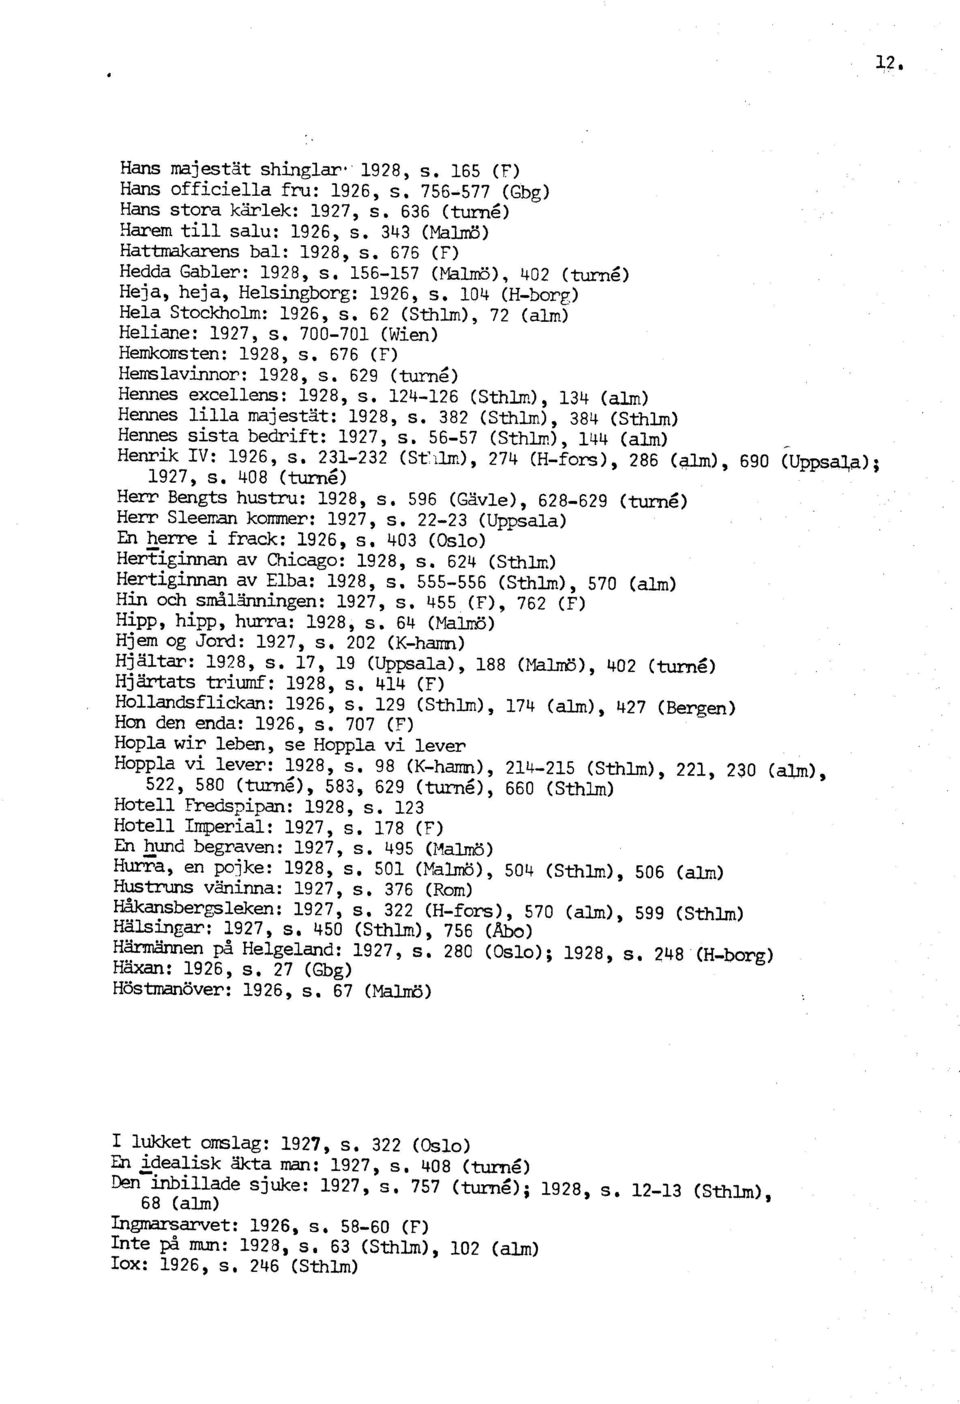 700-701 (Wien) Hemkomten: 1928, s. 676 (F) Hemslavinnor: 1928, s. 629 (turné) Hennes excellens: 1928, s. 124-126 (Sthh.), 134 (alm) Hennes lilla mjestzt: 1928, s.